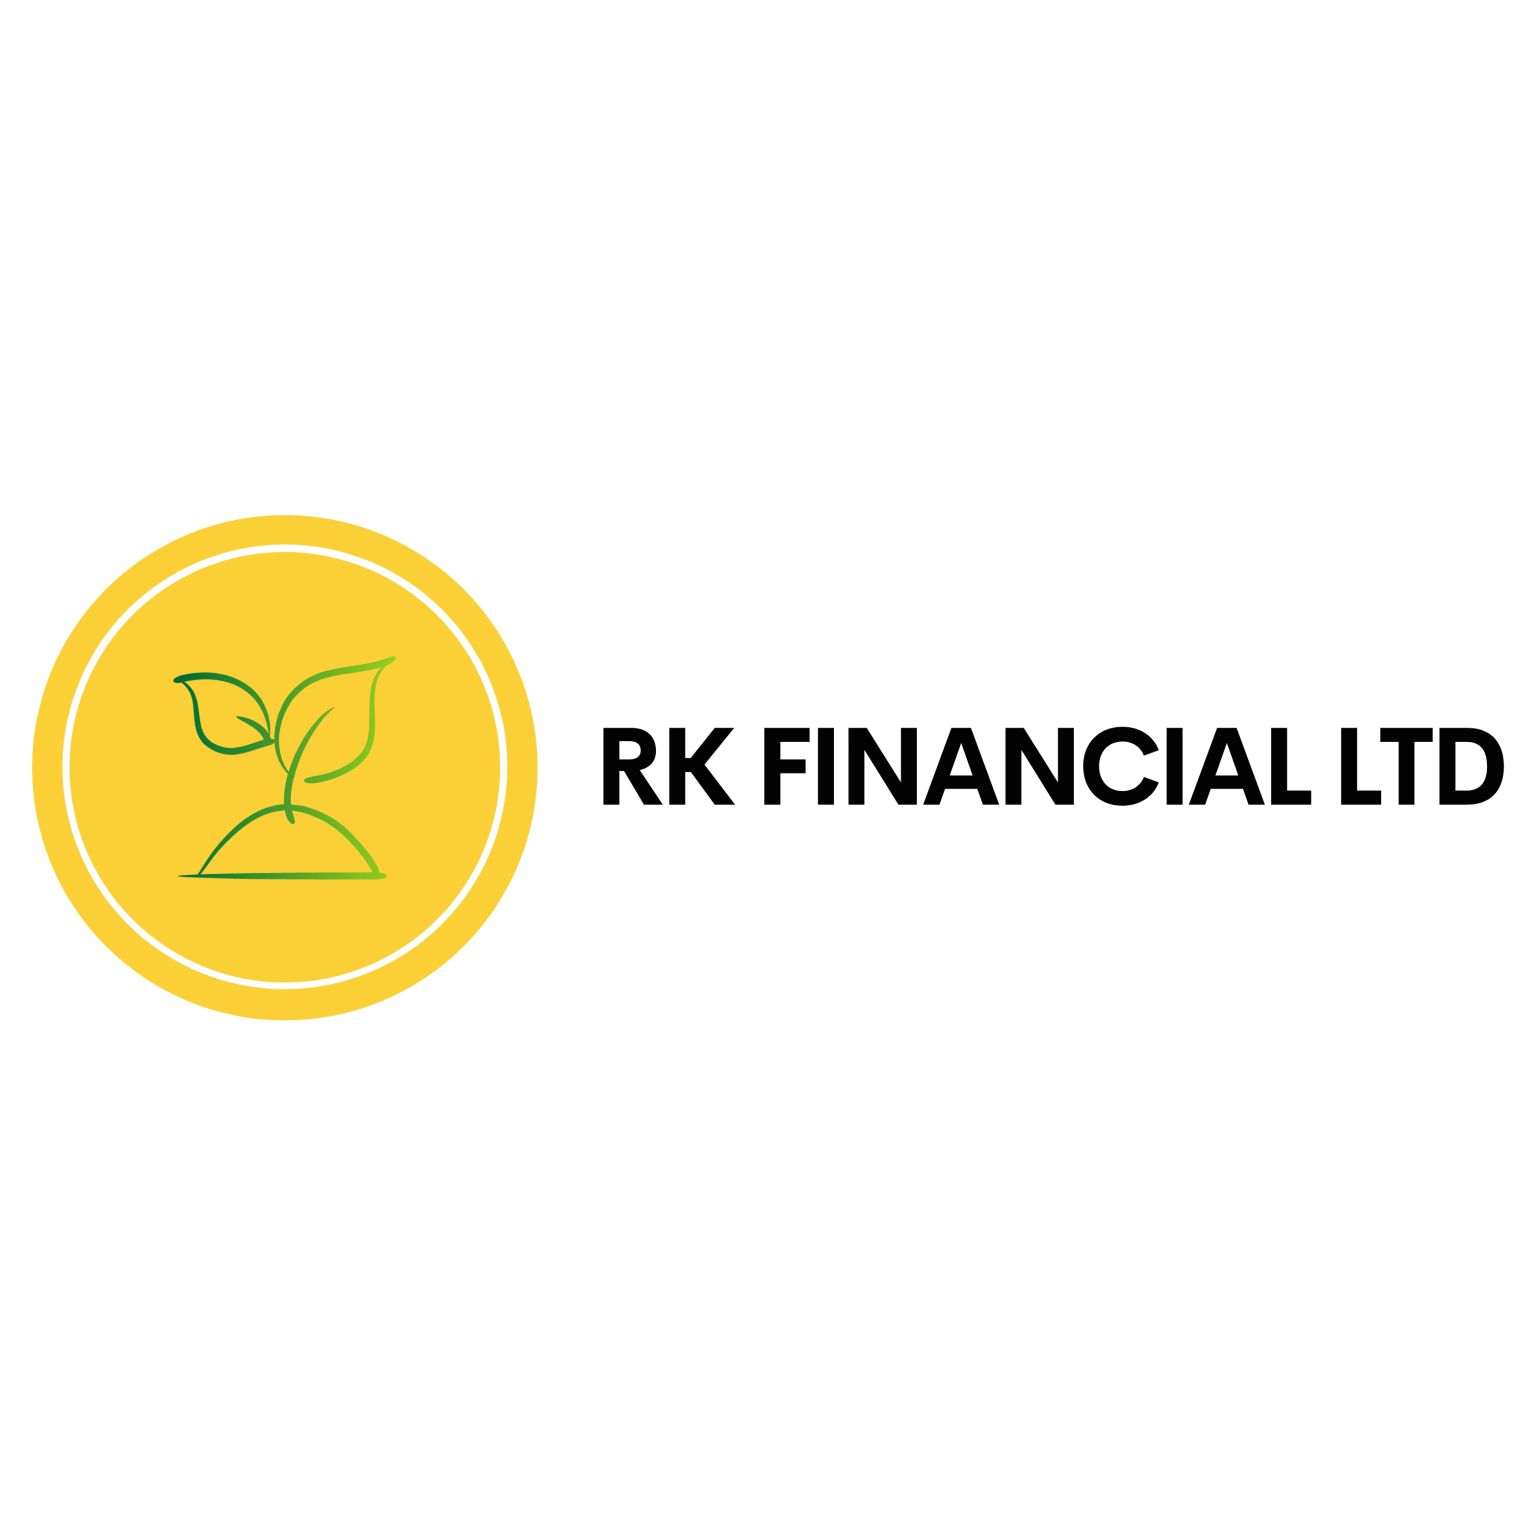 RK Financial Ltd